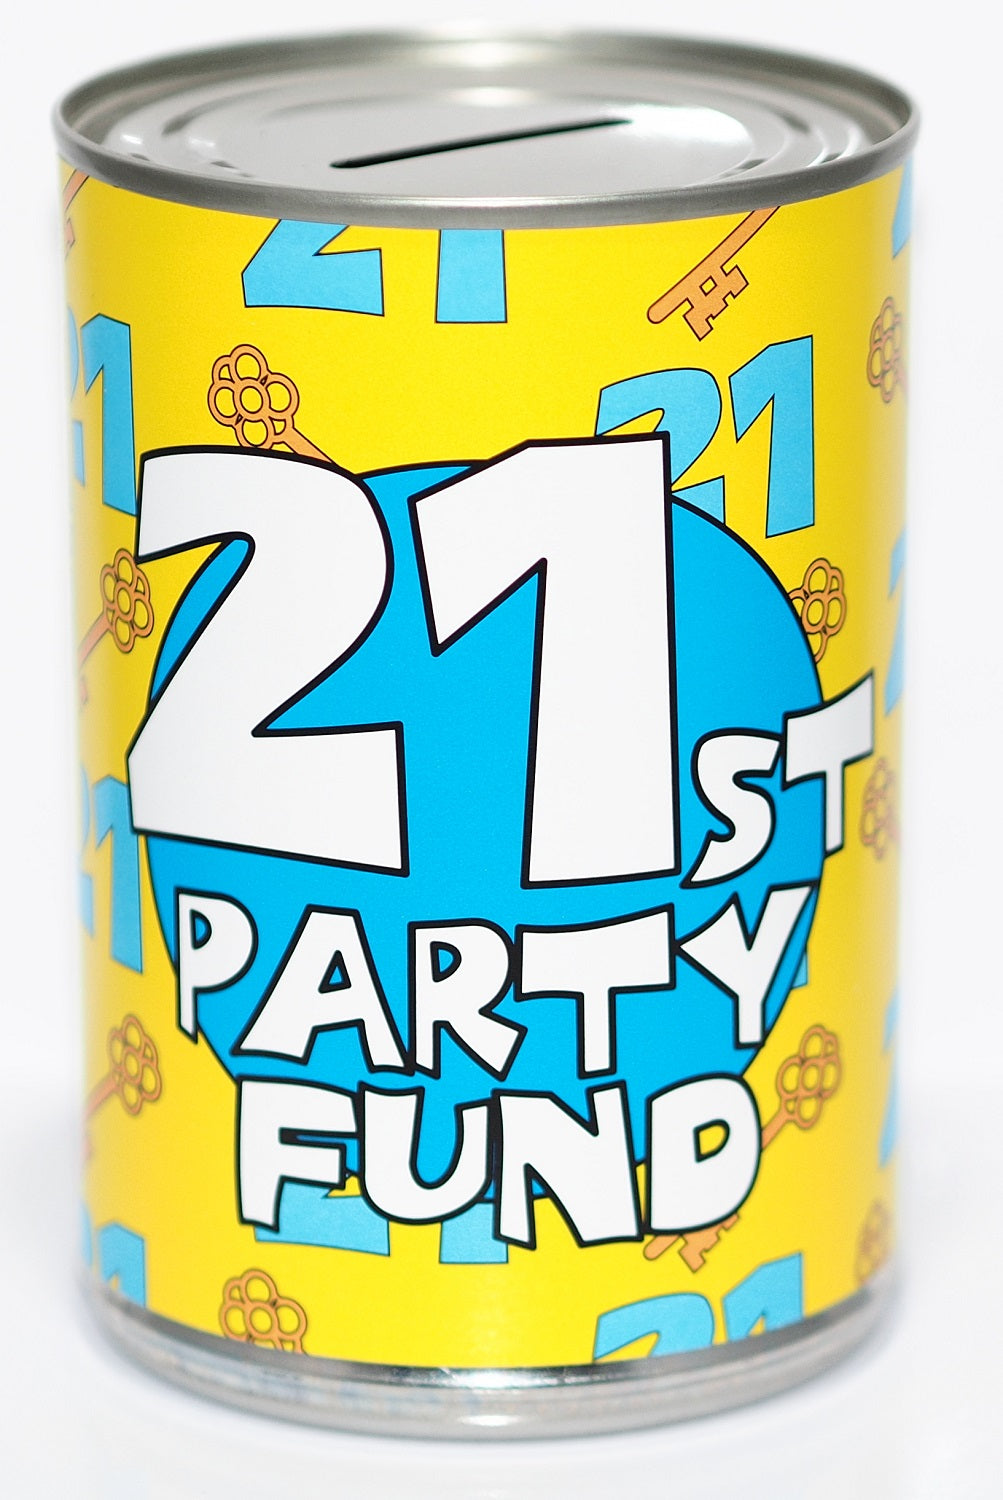 21st Birthday Fund Savings Tin Standard